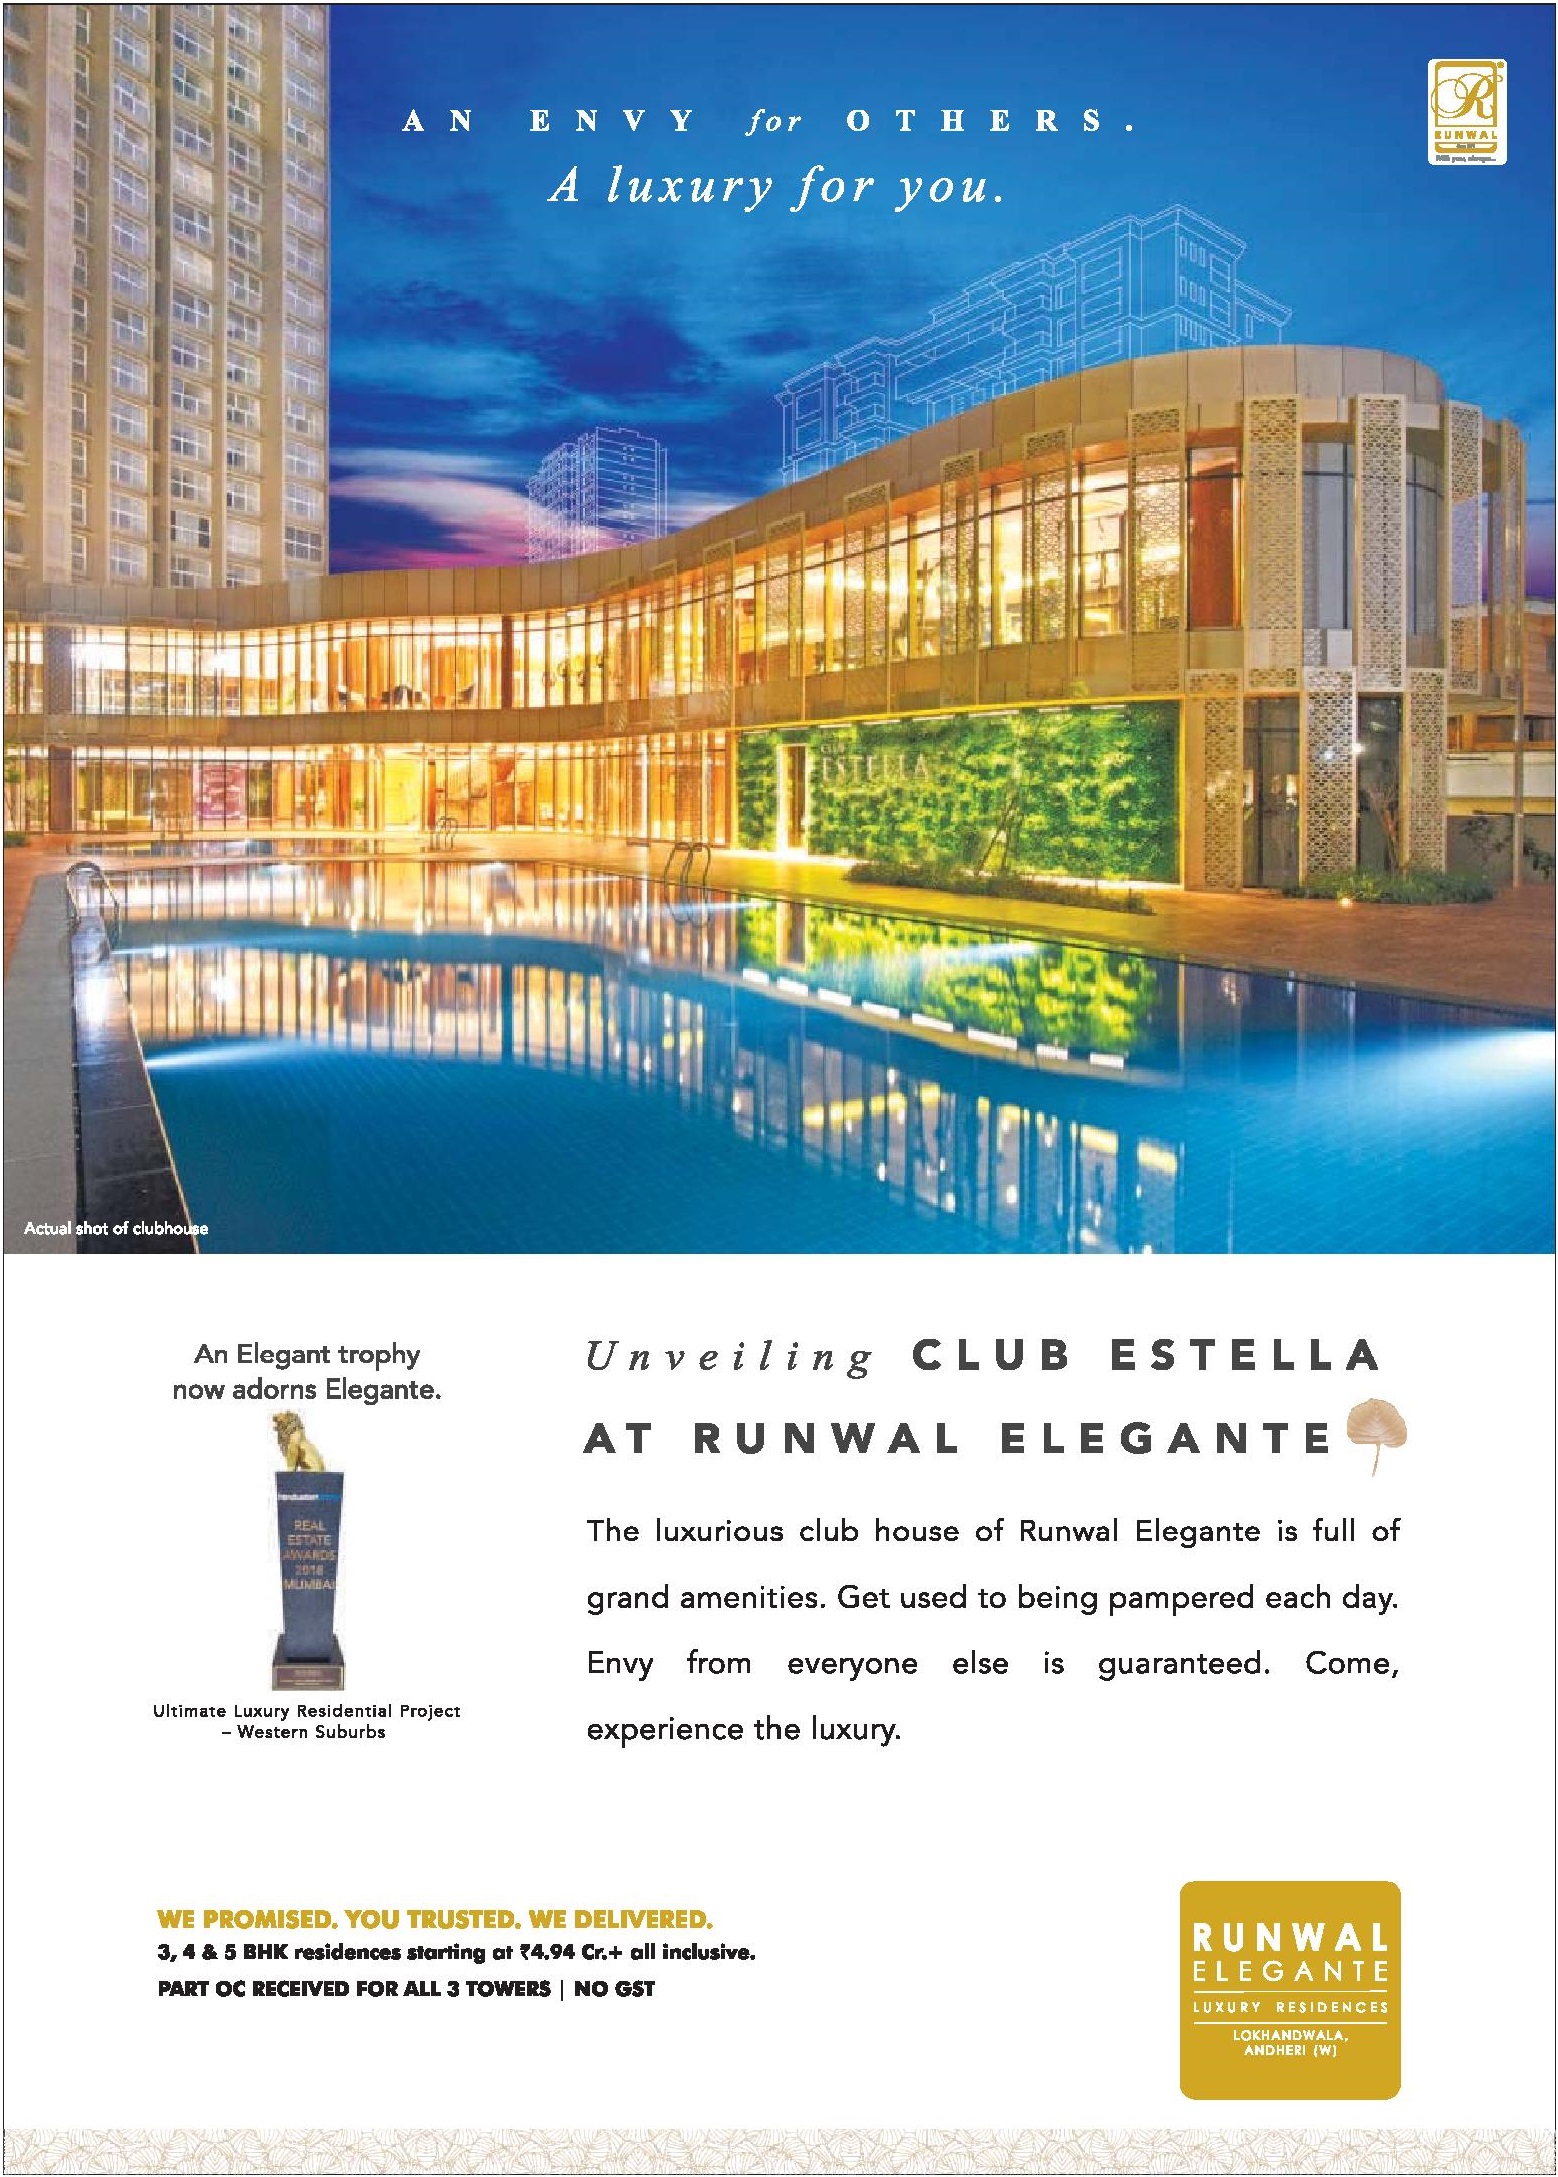 Unveiling Estella Club at Runwal Elegante in Lokhandwala, Mumbai